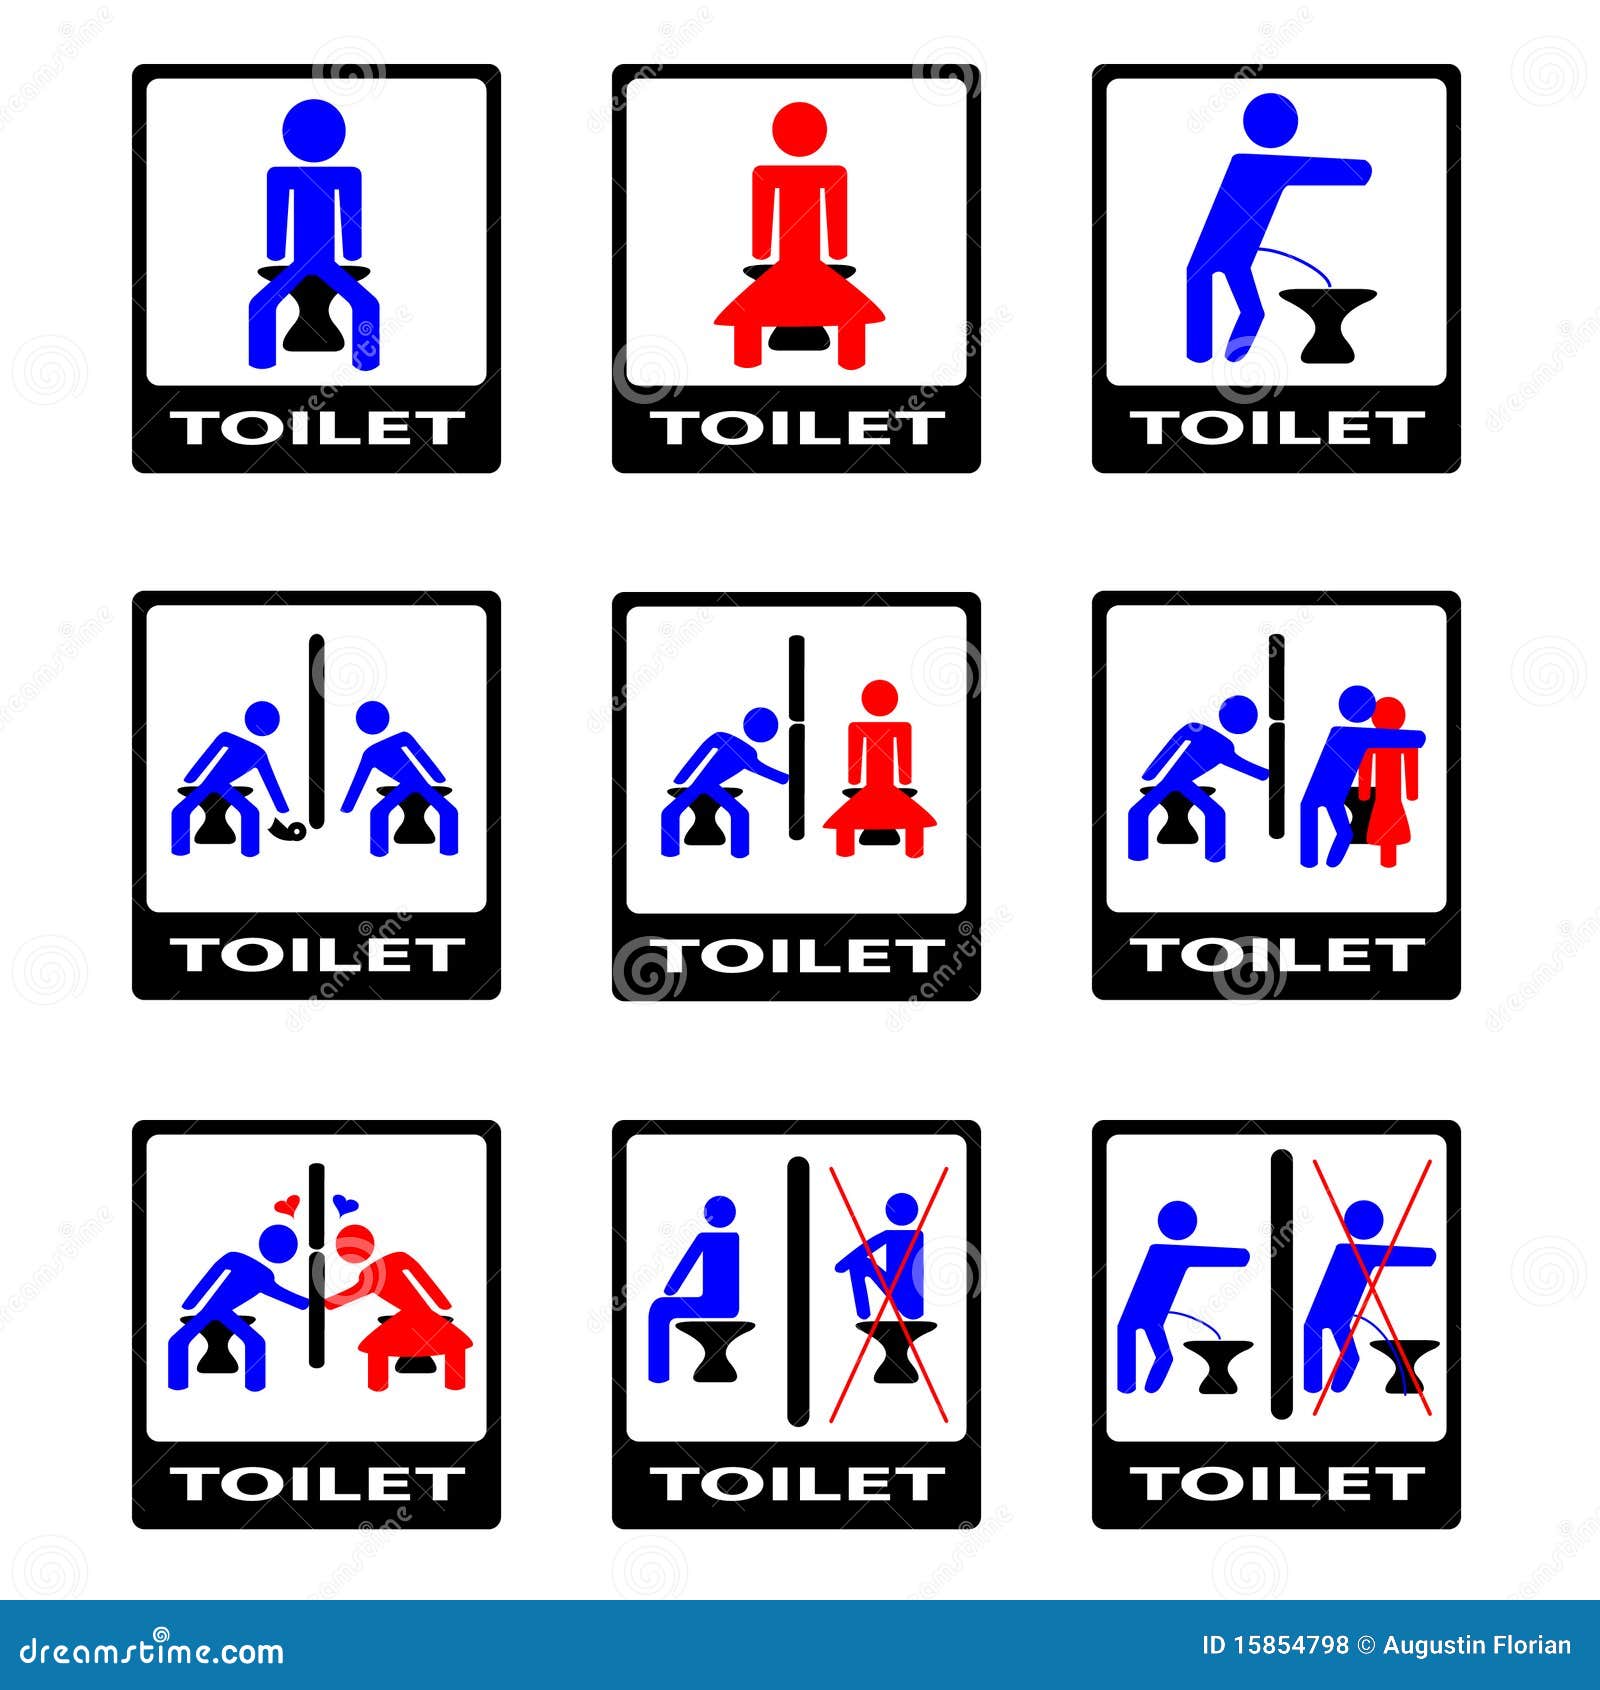 6 funny toilet sign stock vector. Illustration of bathroom - 15854798